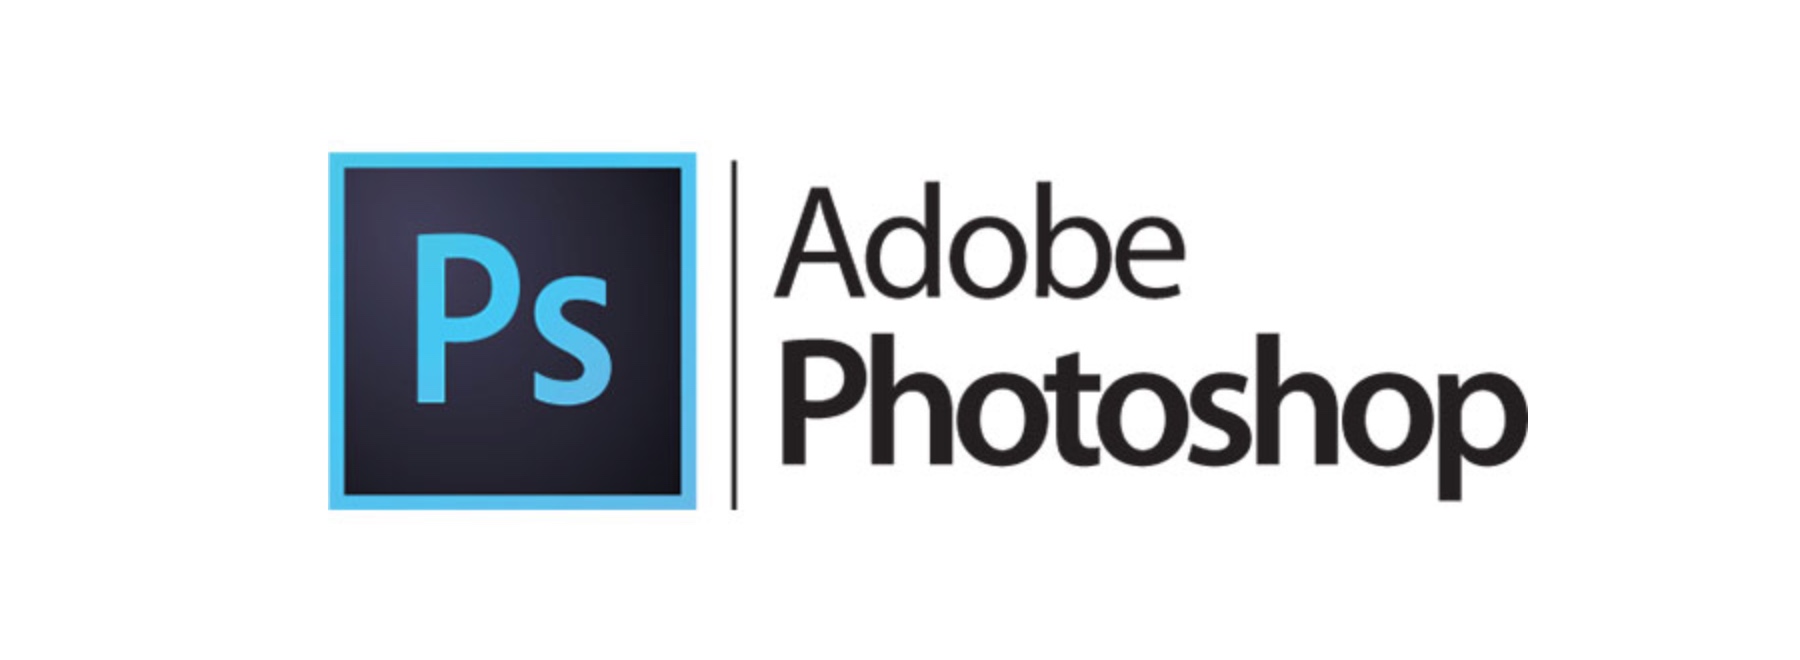 photoshop cs3 logo